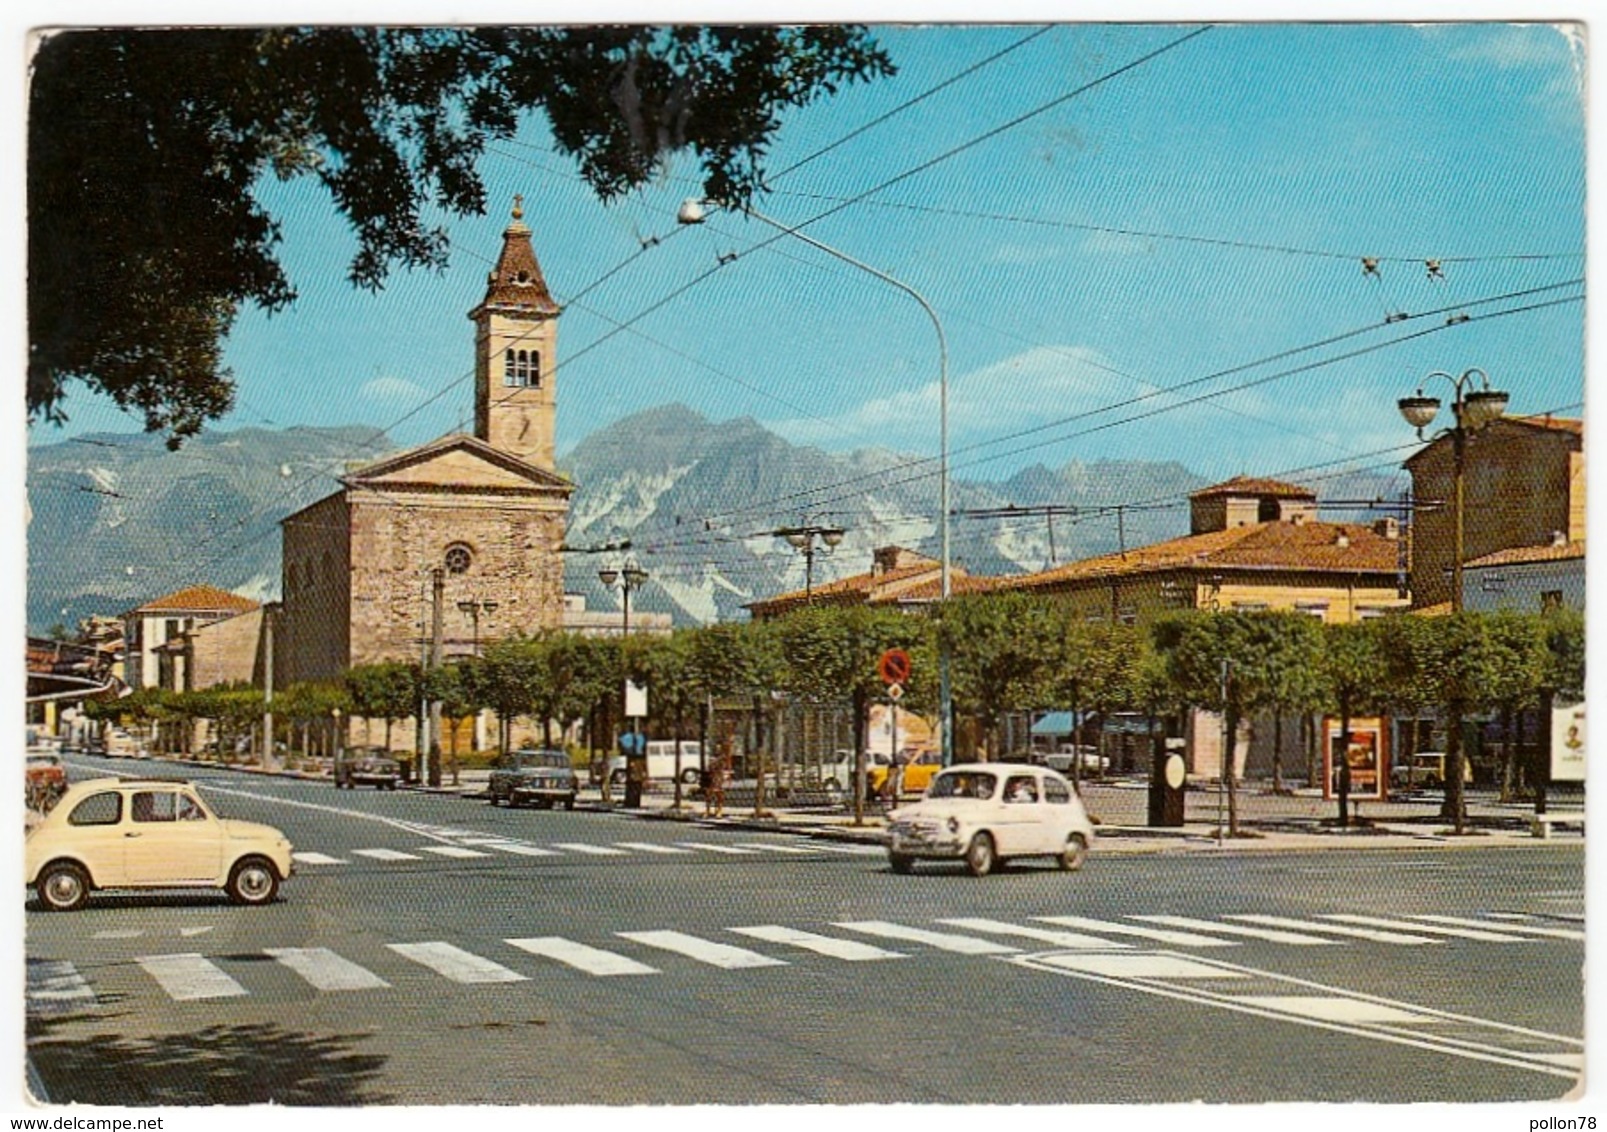 MARINA DI CARRARA - PIAZZA GINO MENCONI - 1974 - AUTOMOBILI - CARS - Carrara